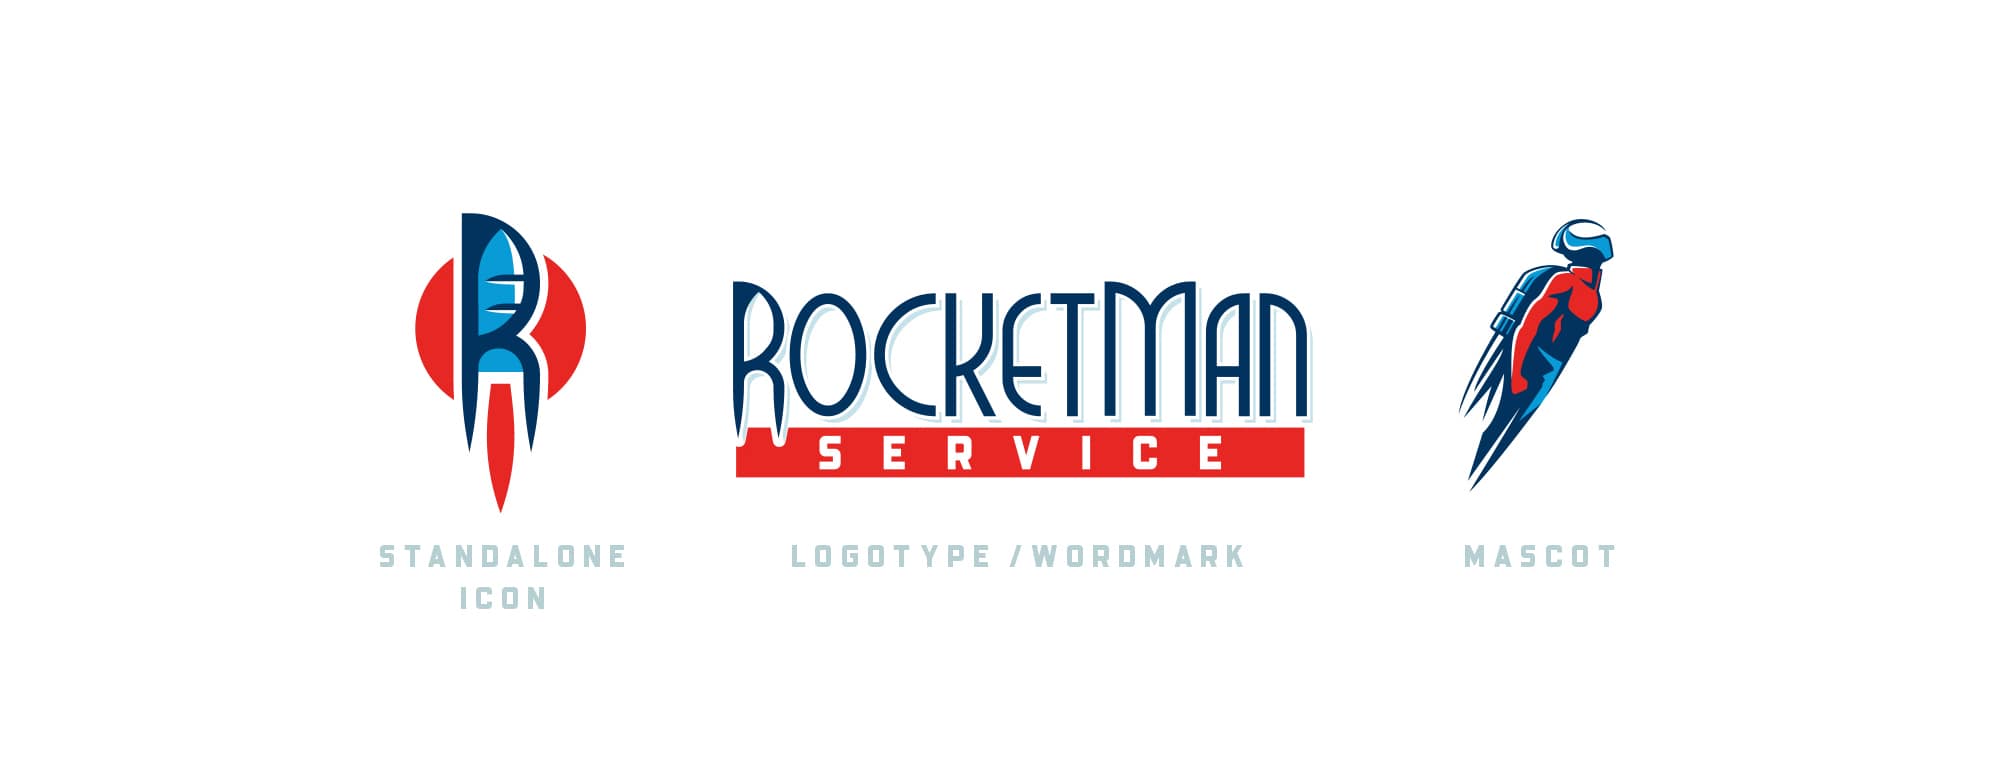 Rocketman Icon Etc Min